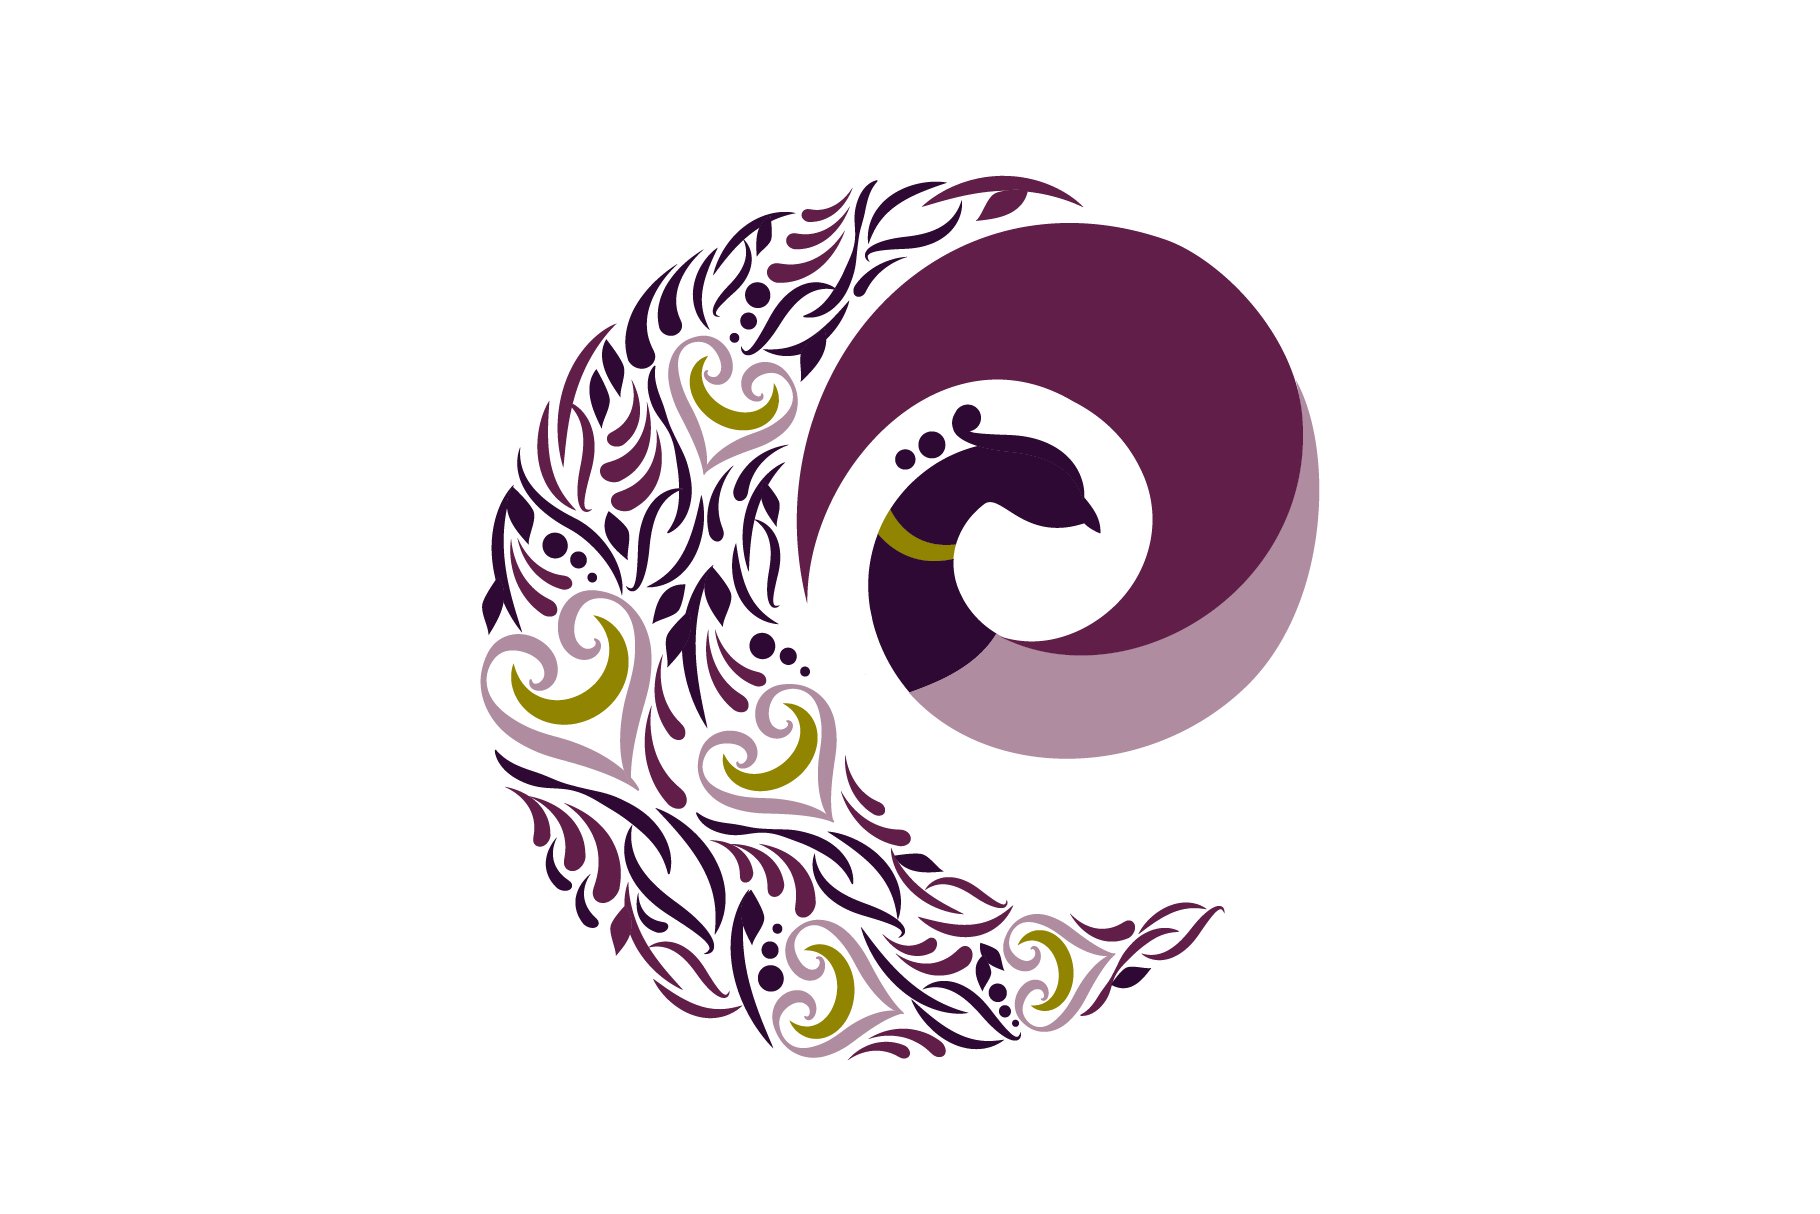 Peacock Spiral Logo cover image.